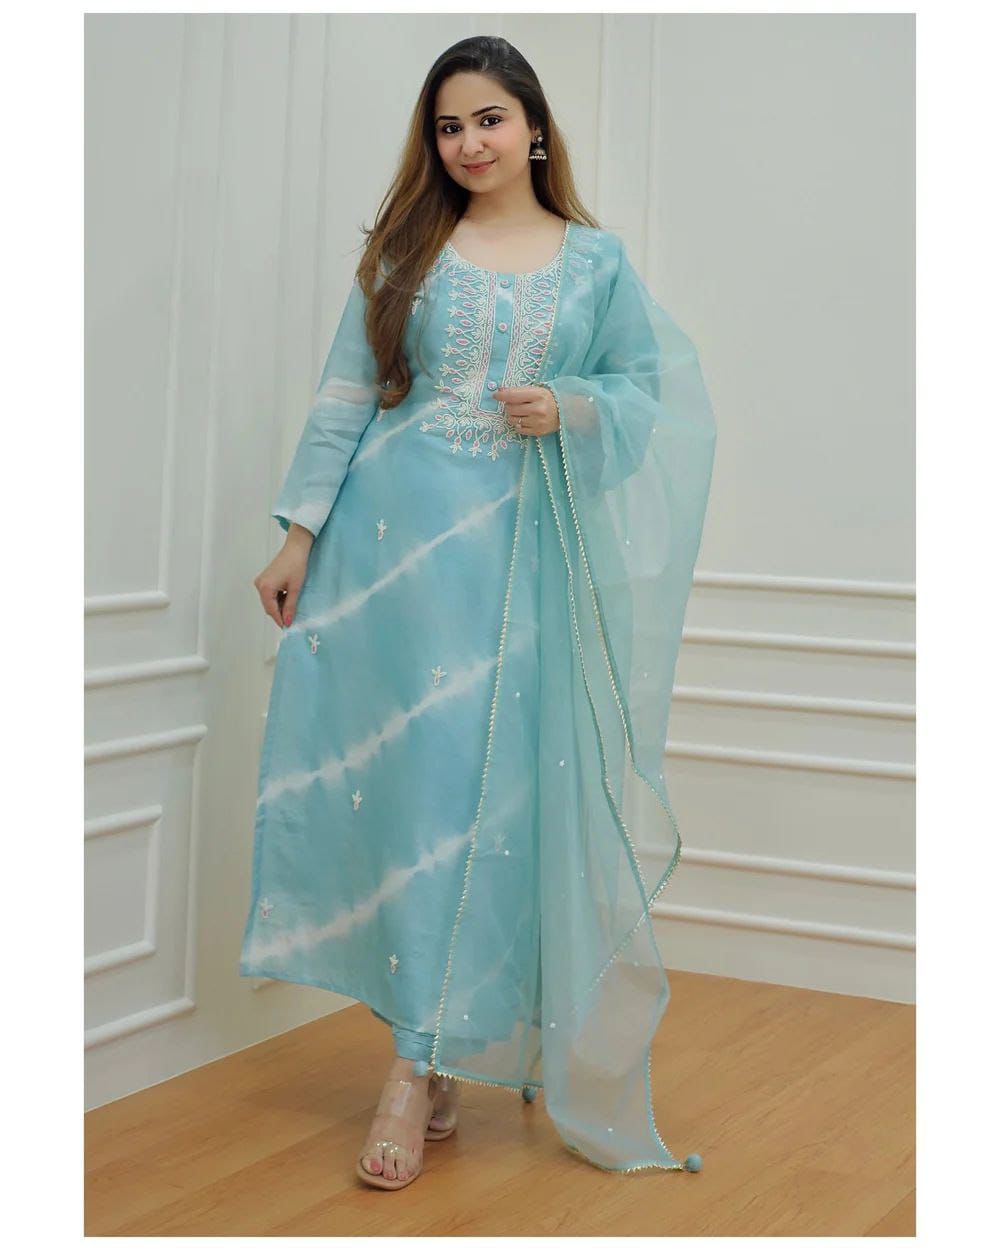 Designer Embroidery 100% cotton Salwar Suit PURE CHIFFON Dupatta RM295 -  muteyaar.com